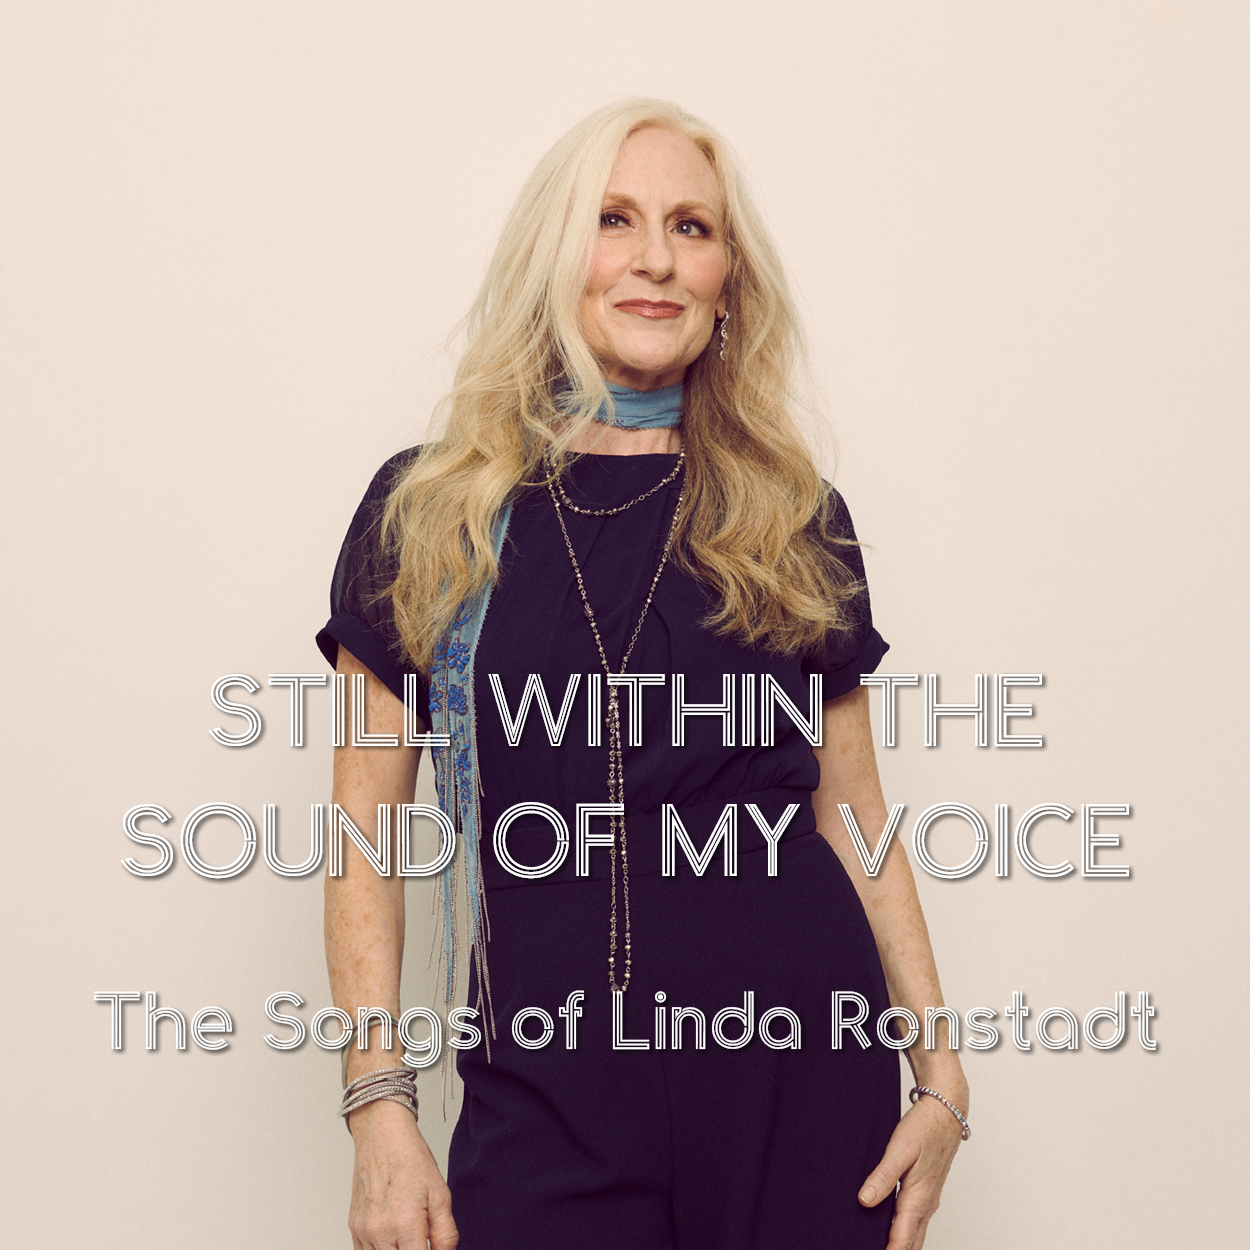 Elizabeth Ward Land's Tribute to Linda Ronstadt